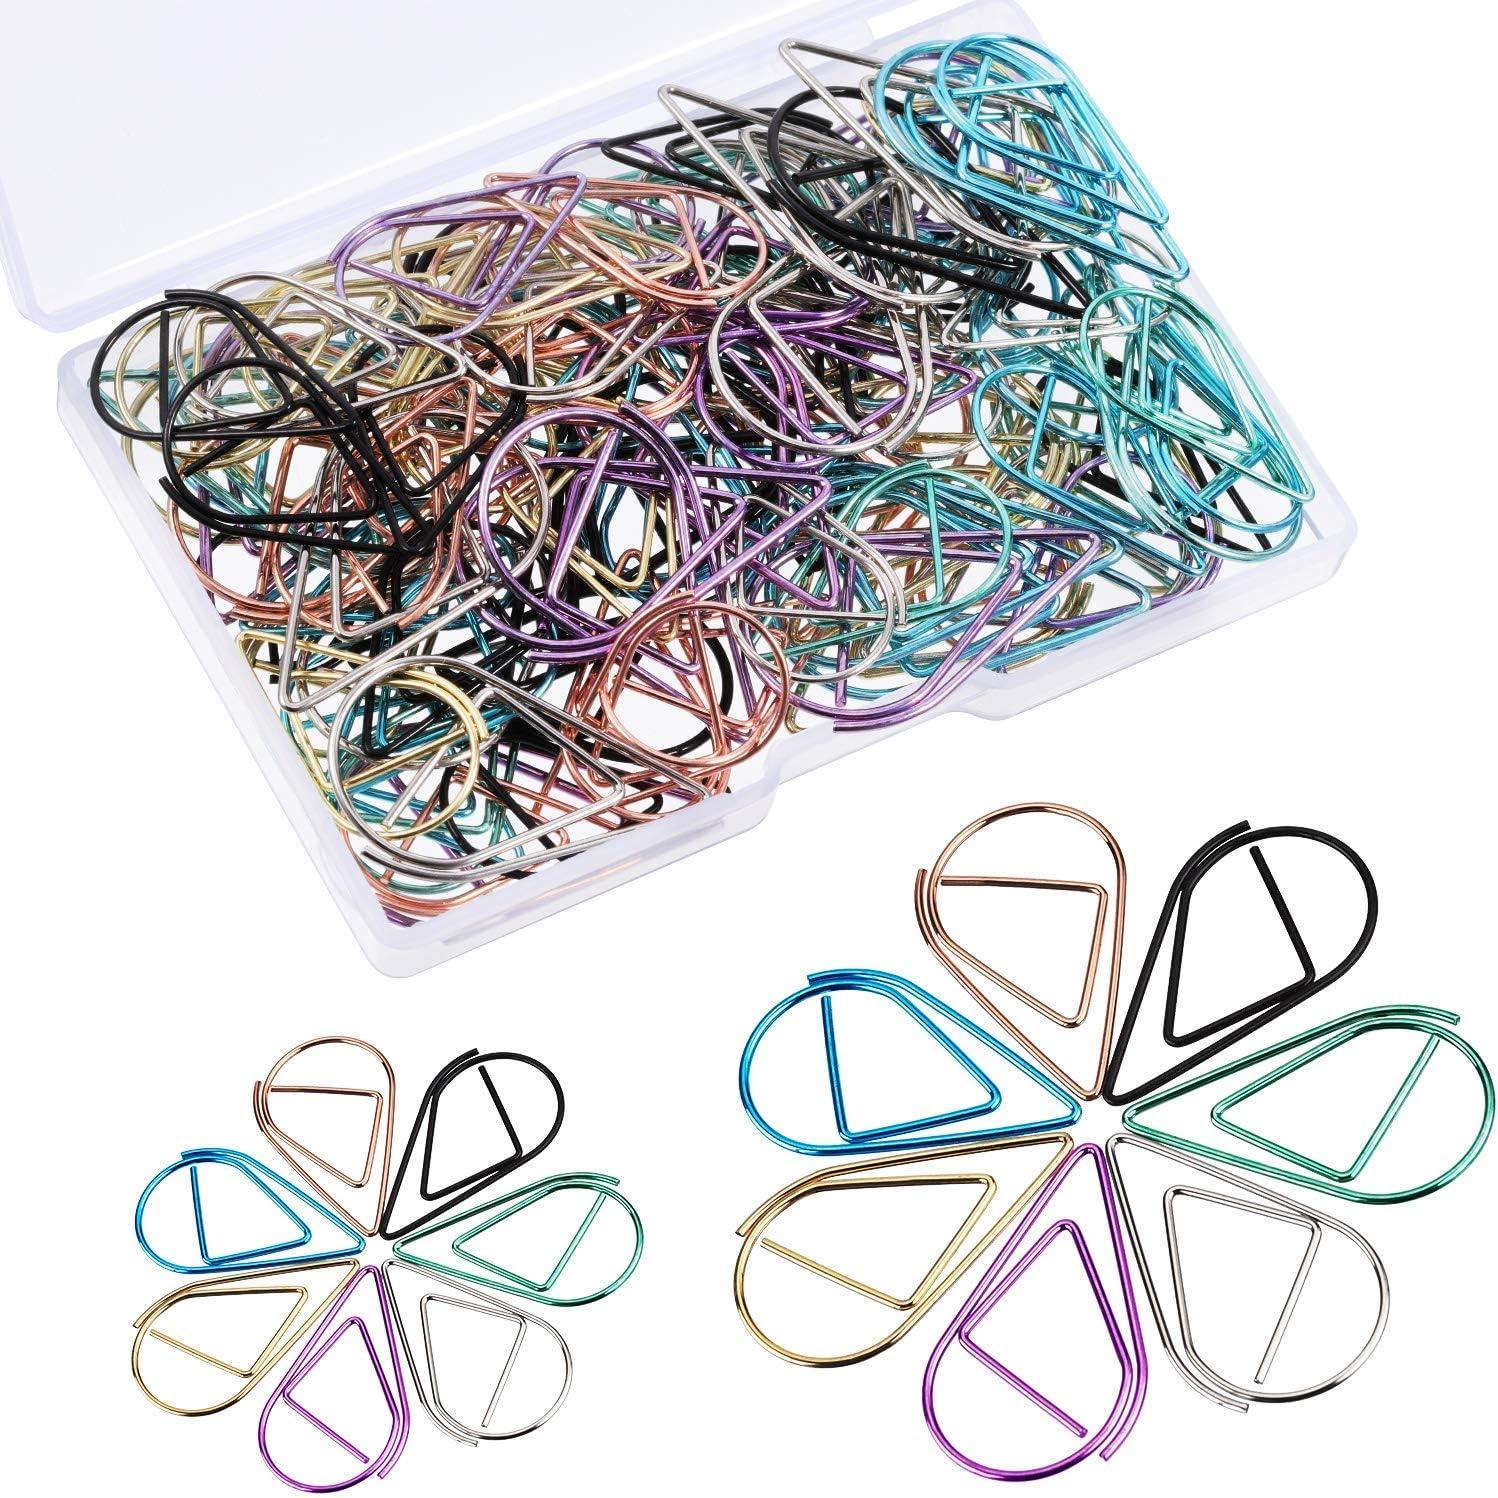 quesuc 105 pieces multicolor paperclips metal paper clips for school office supplies size a  quesuc b0995mjjkx